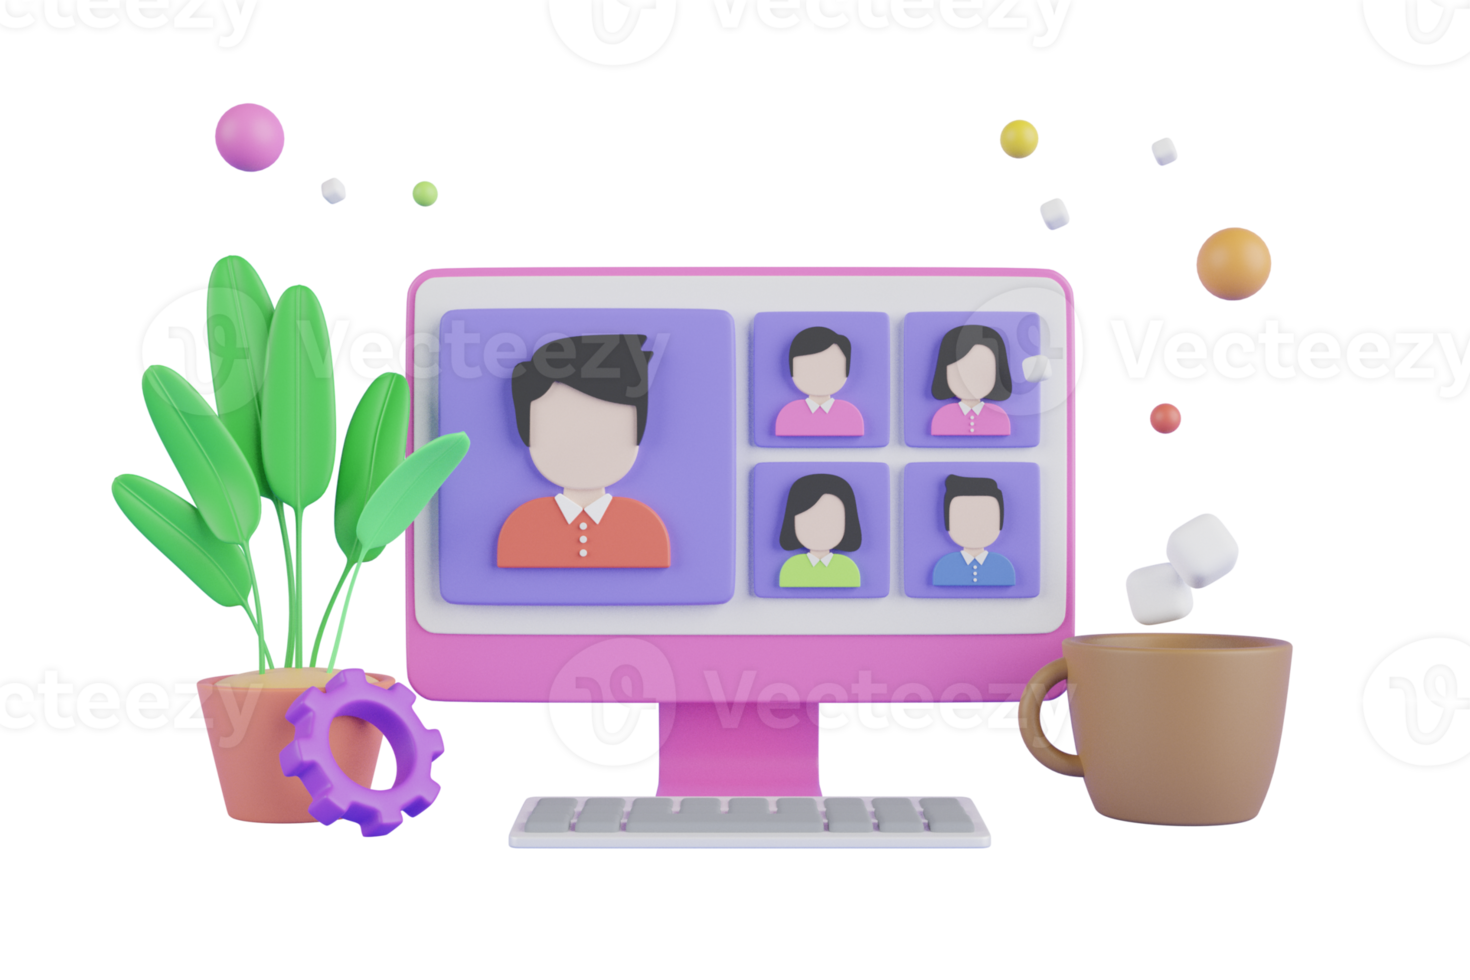 3d-illustration von heimvideoanruf, online-arbeitskonferenzkonzept. online-meeting, virtueller konferenz-videoanruf, briefing, teamarbeitskonzept mit 3d-formen, chatbox, zahnrad, infografik. 3D-Rendering png